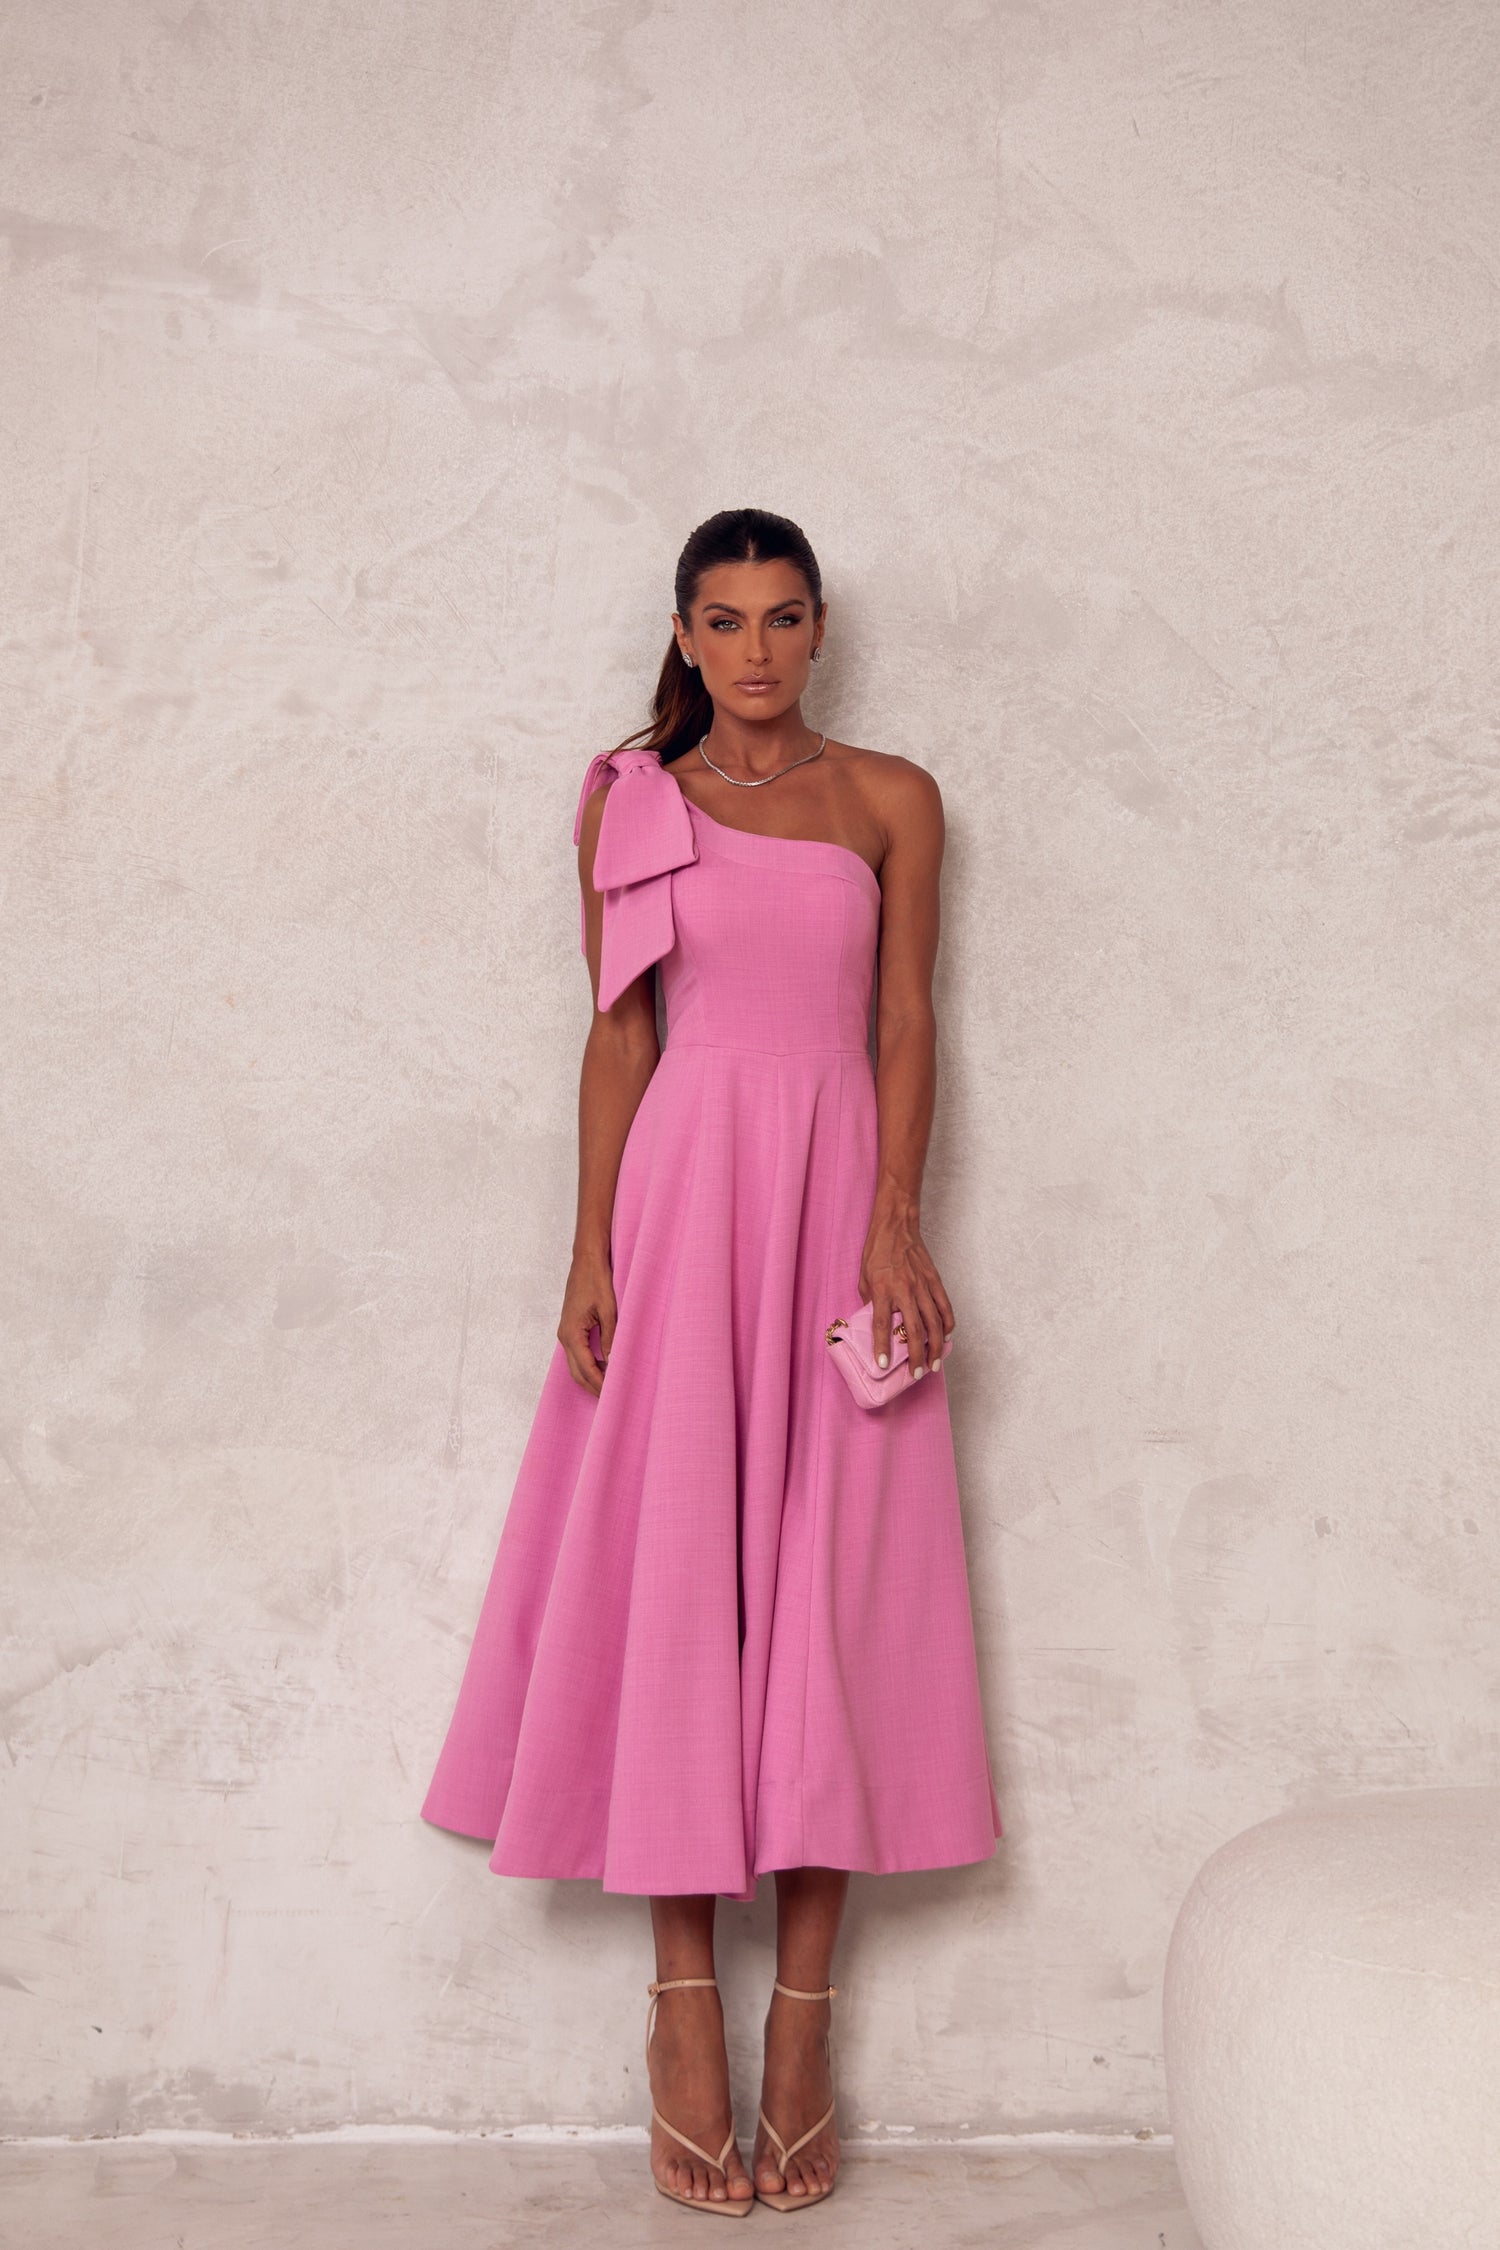 Classic Pink Dress